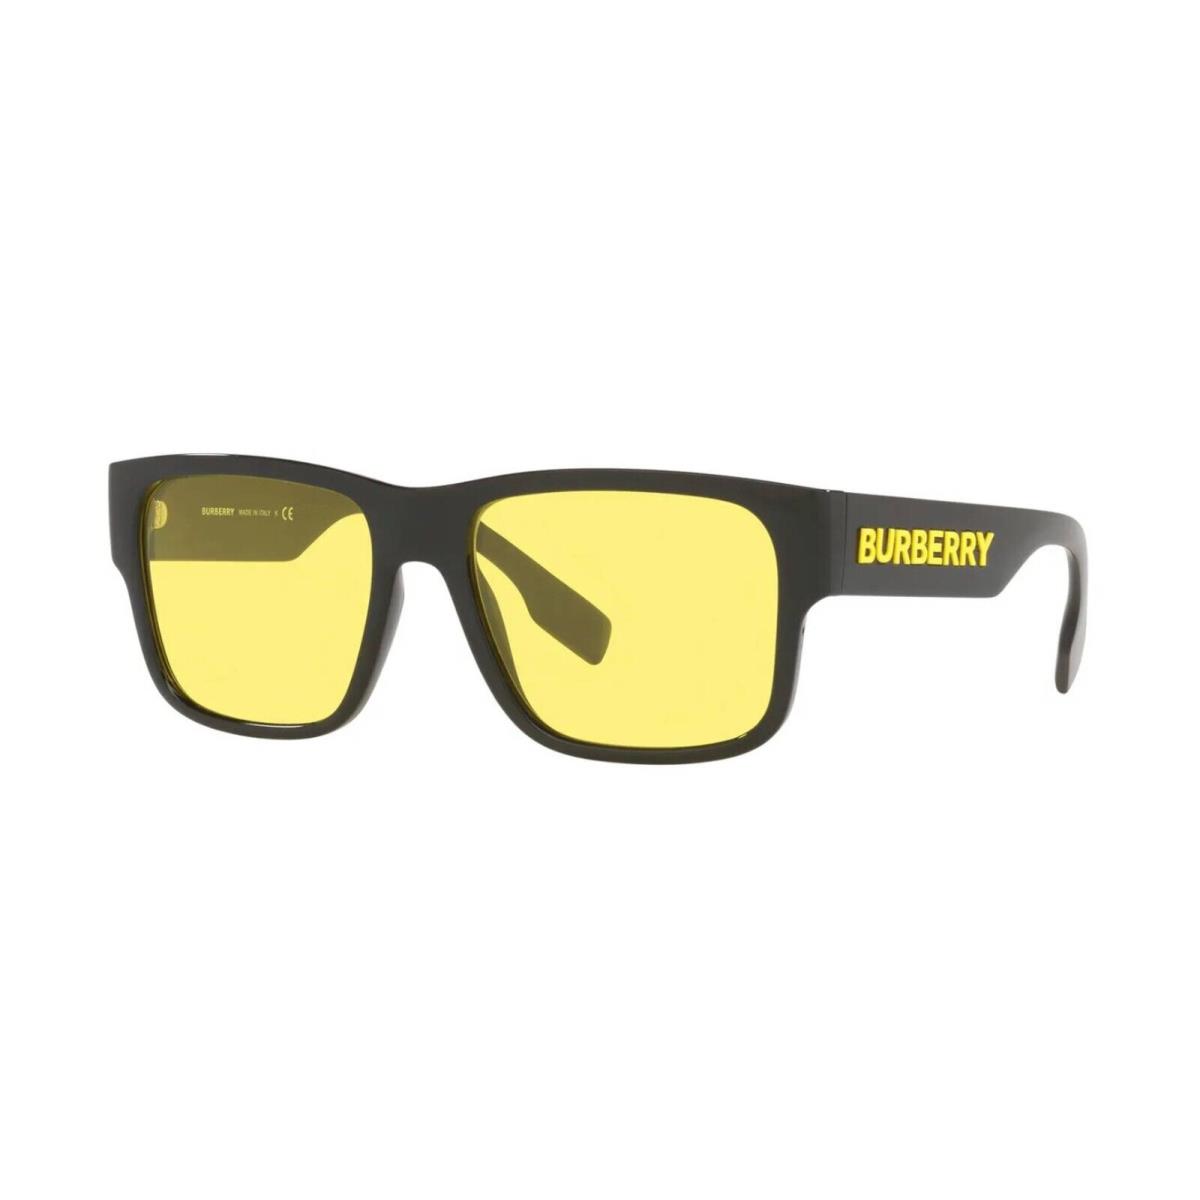 Burberry Knight BE 4358 Black/yellow 3001/85 Sunglasses - Frame: Black, Lens: Yellow